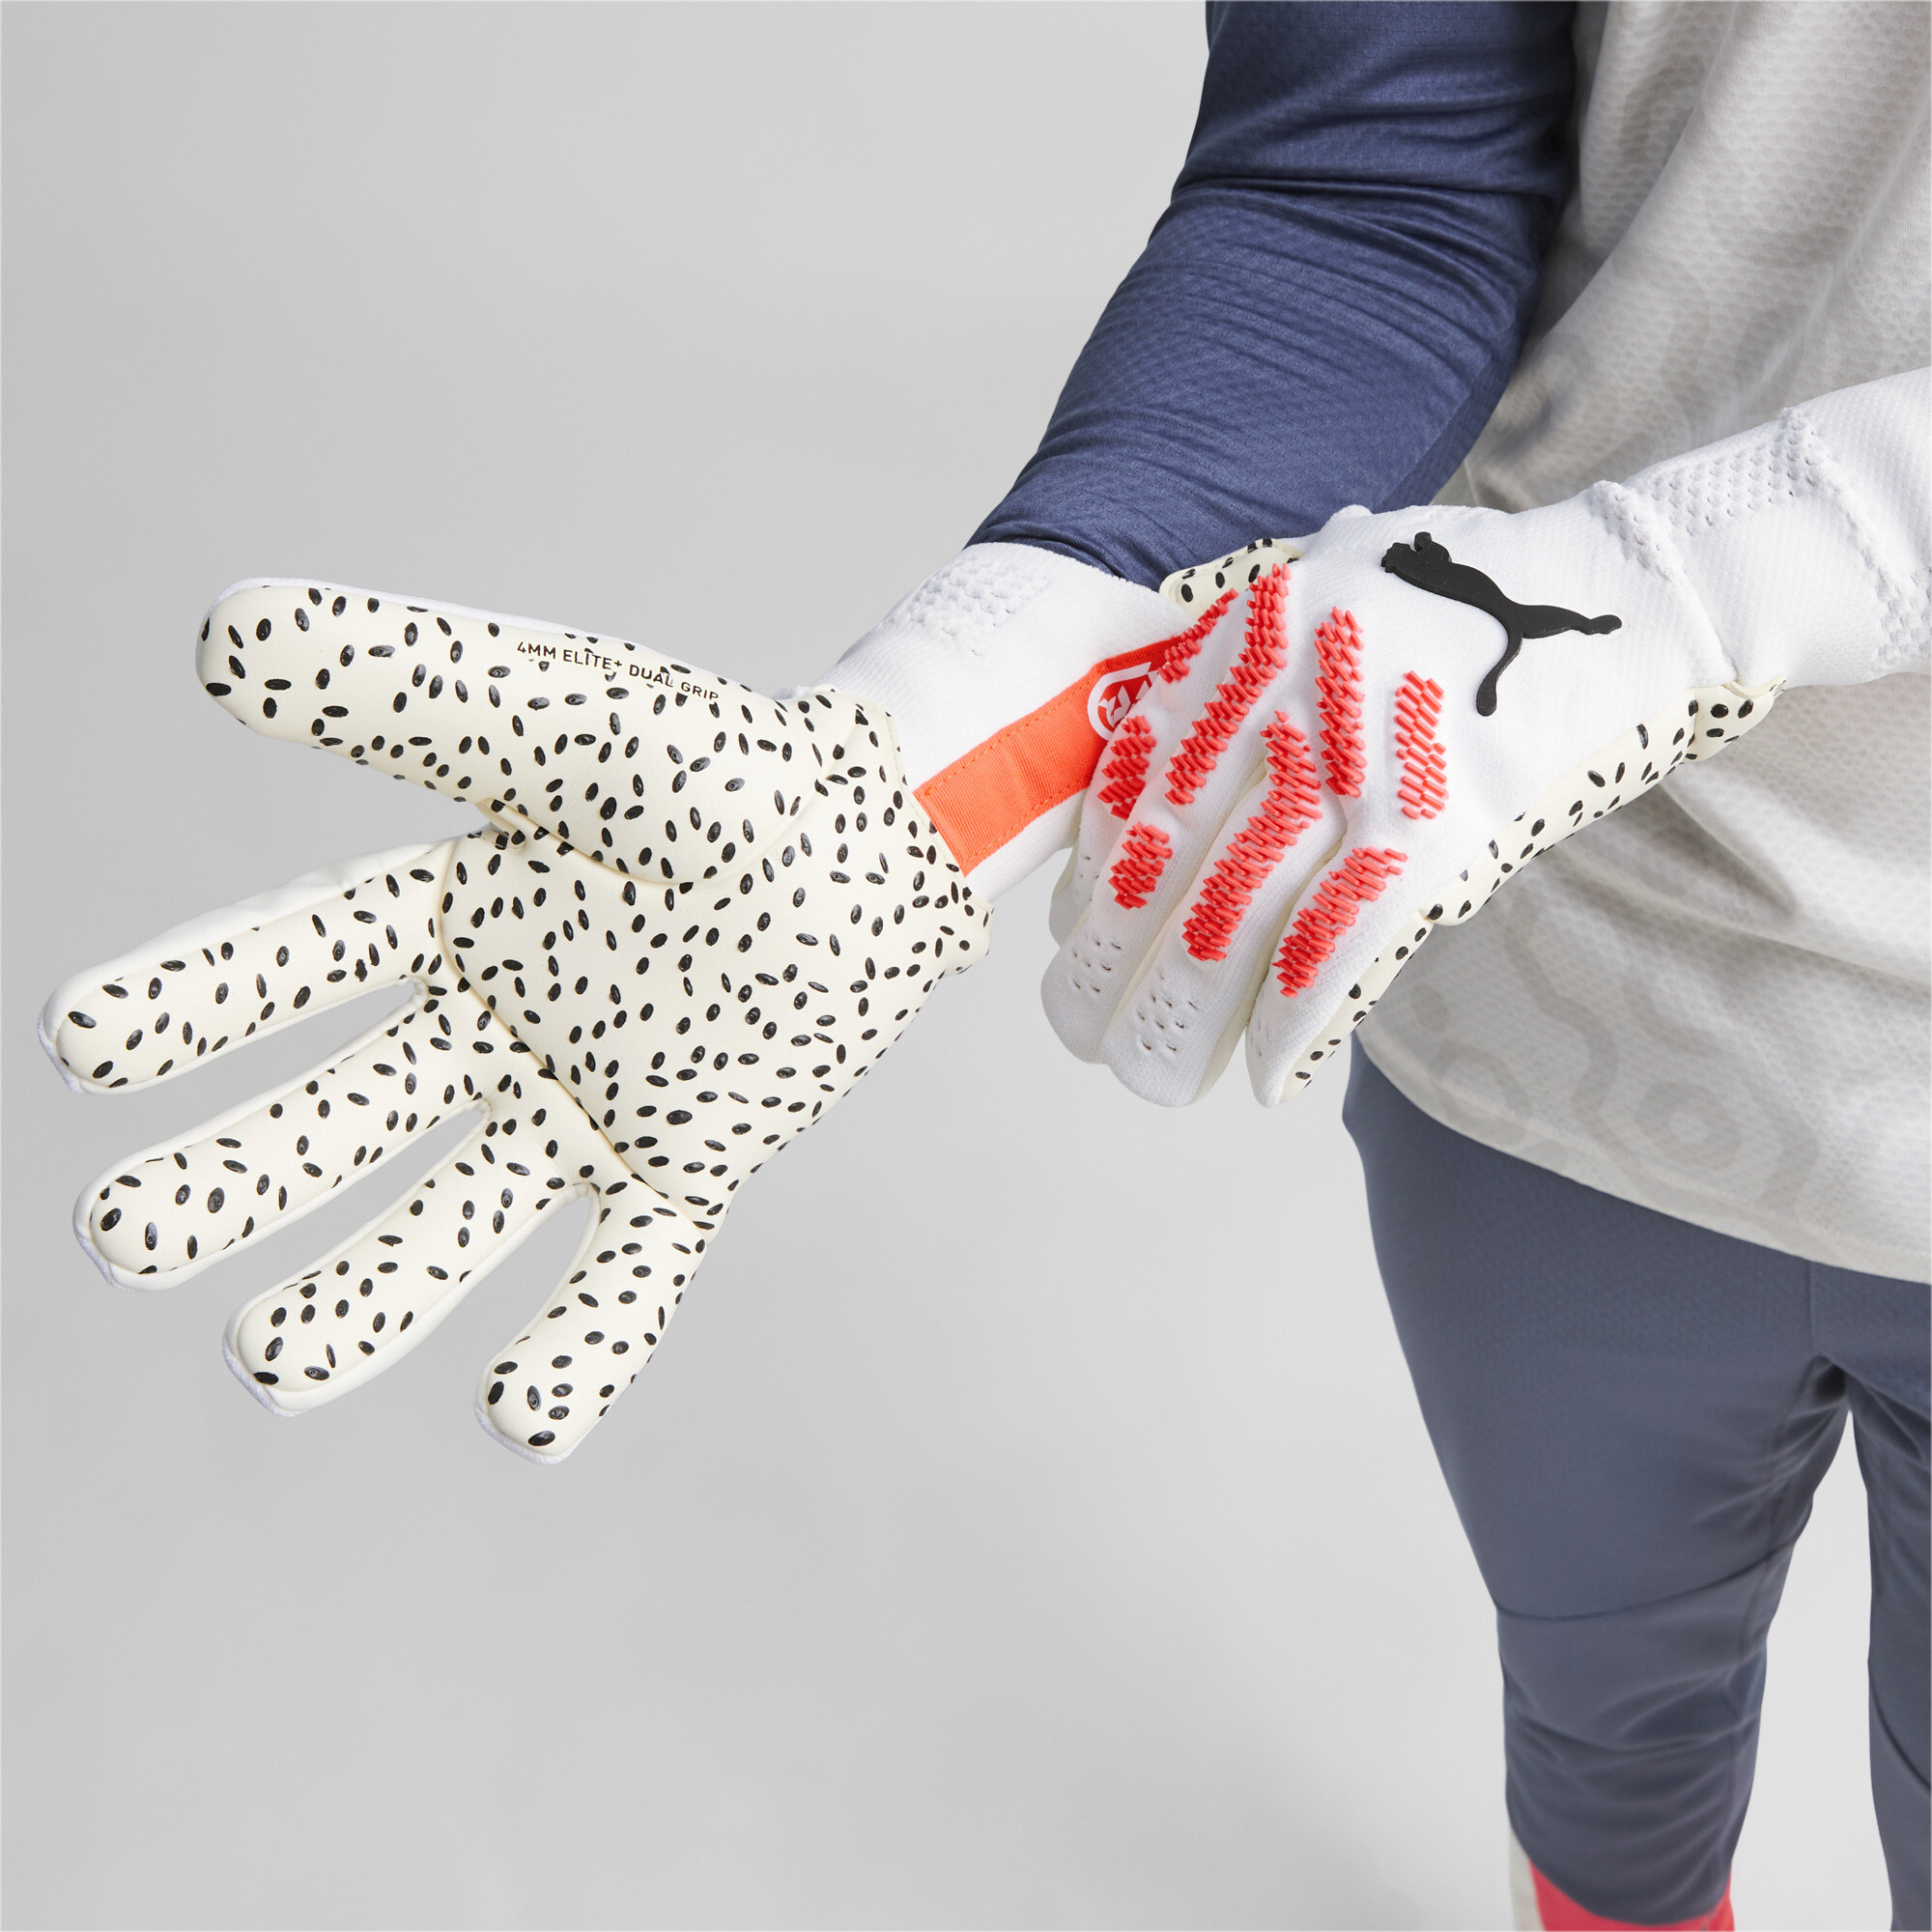 Men's Puma FUTURE Ultimate Negative Cut Football Goalkeeper Gloves, White, Size 11, Accessories